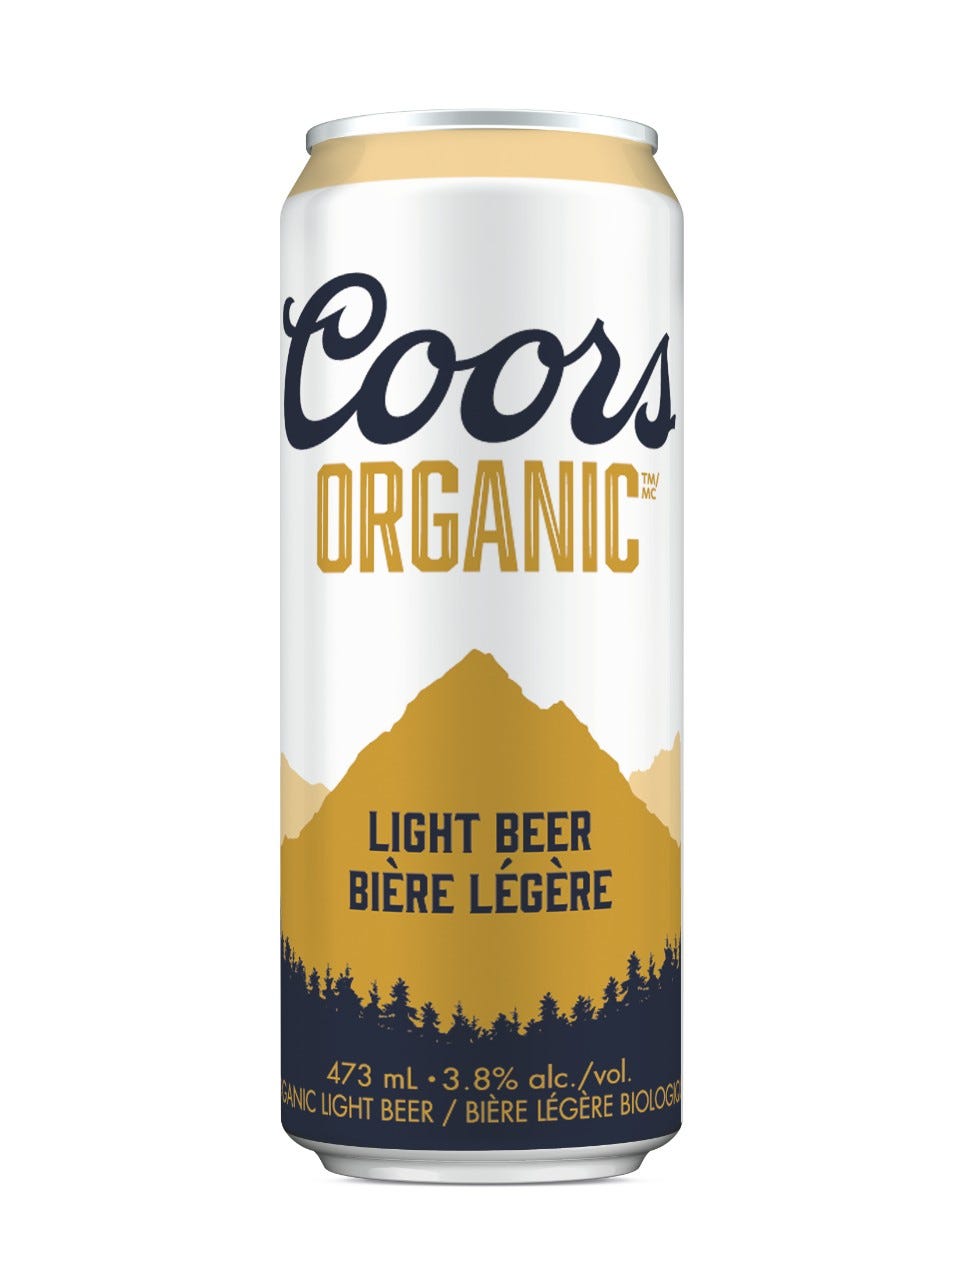 Coors Organic | LCBO